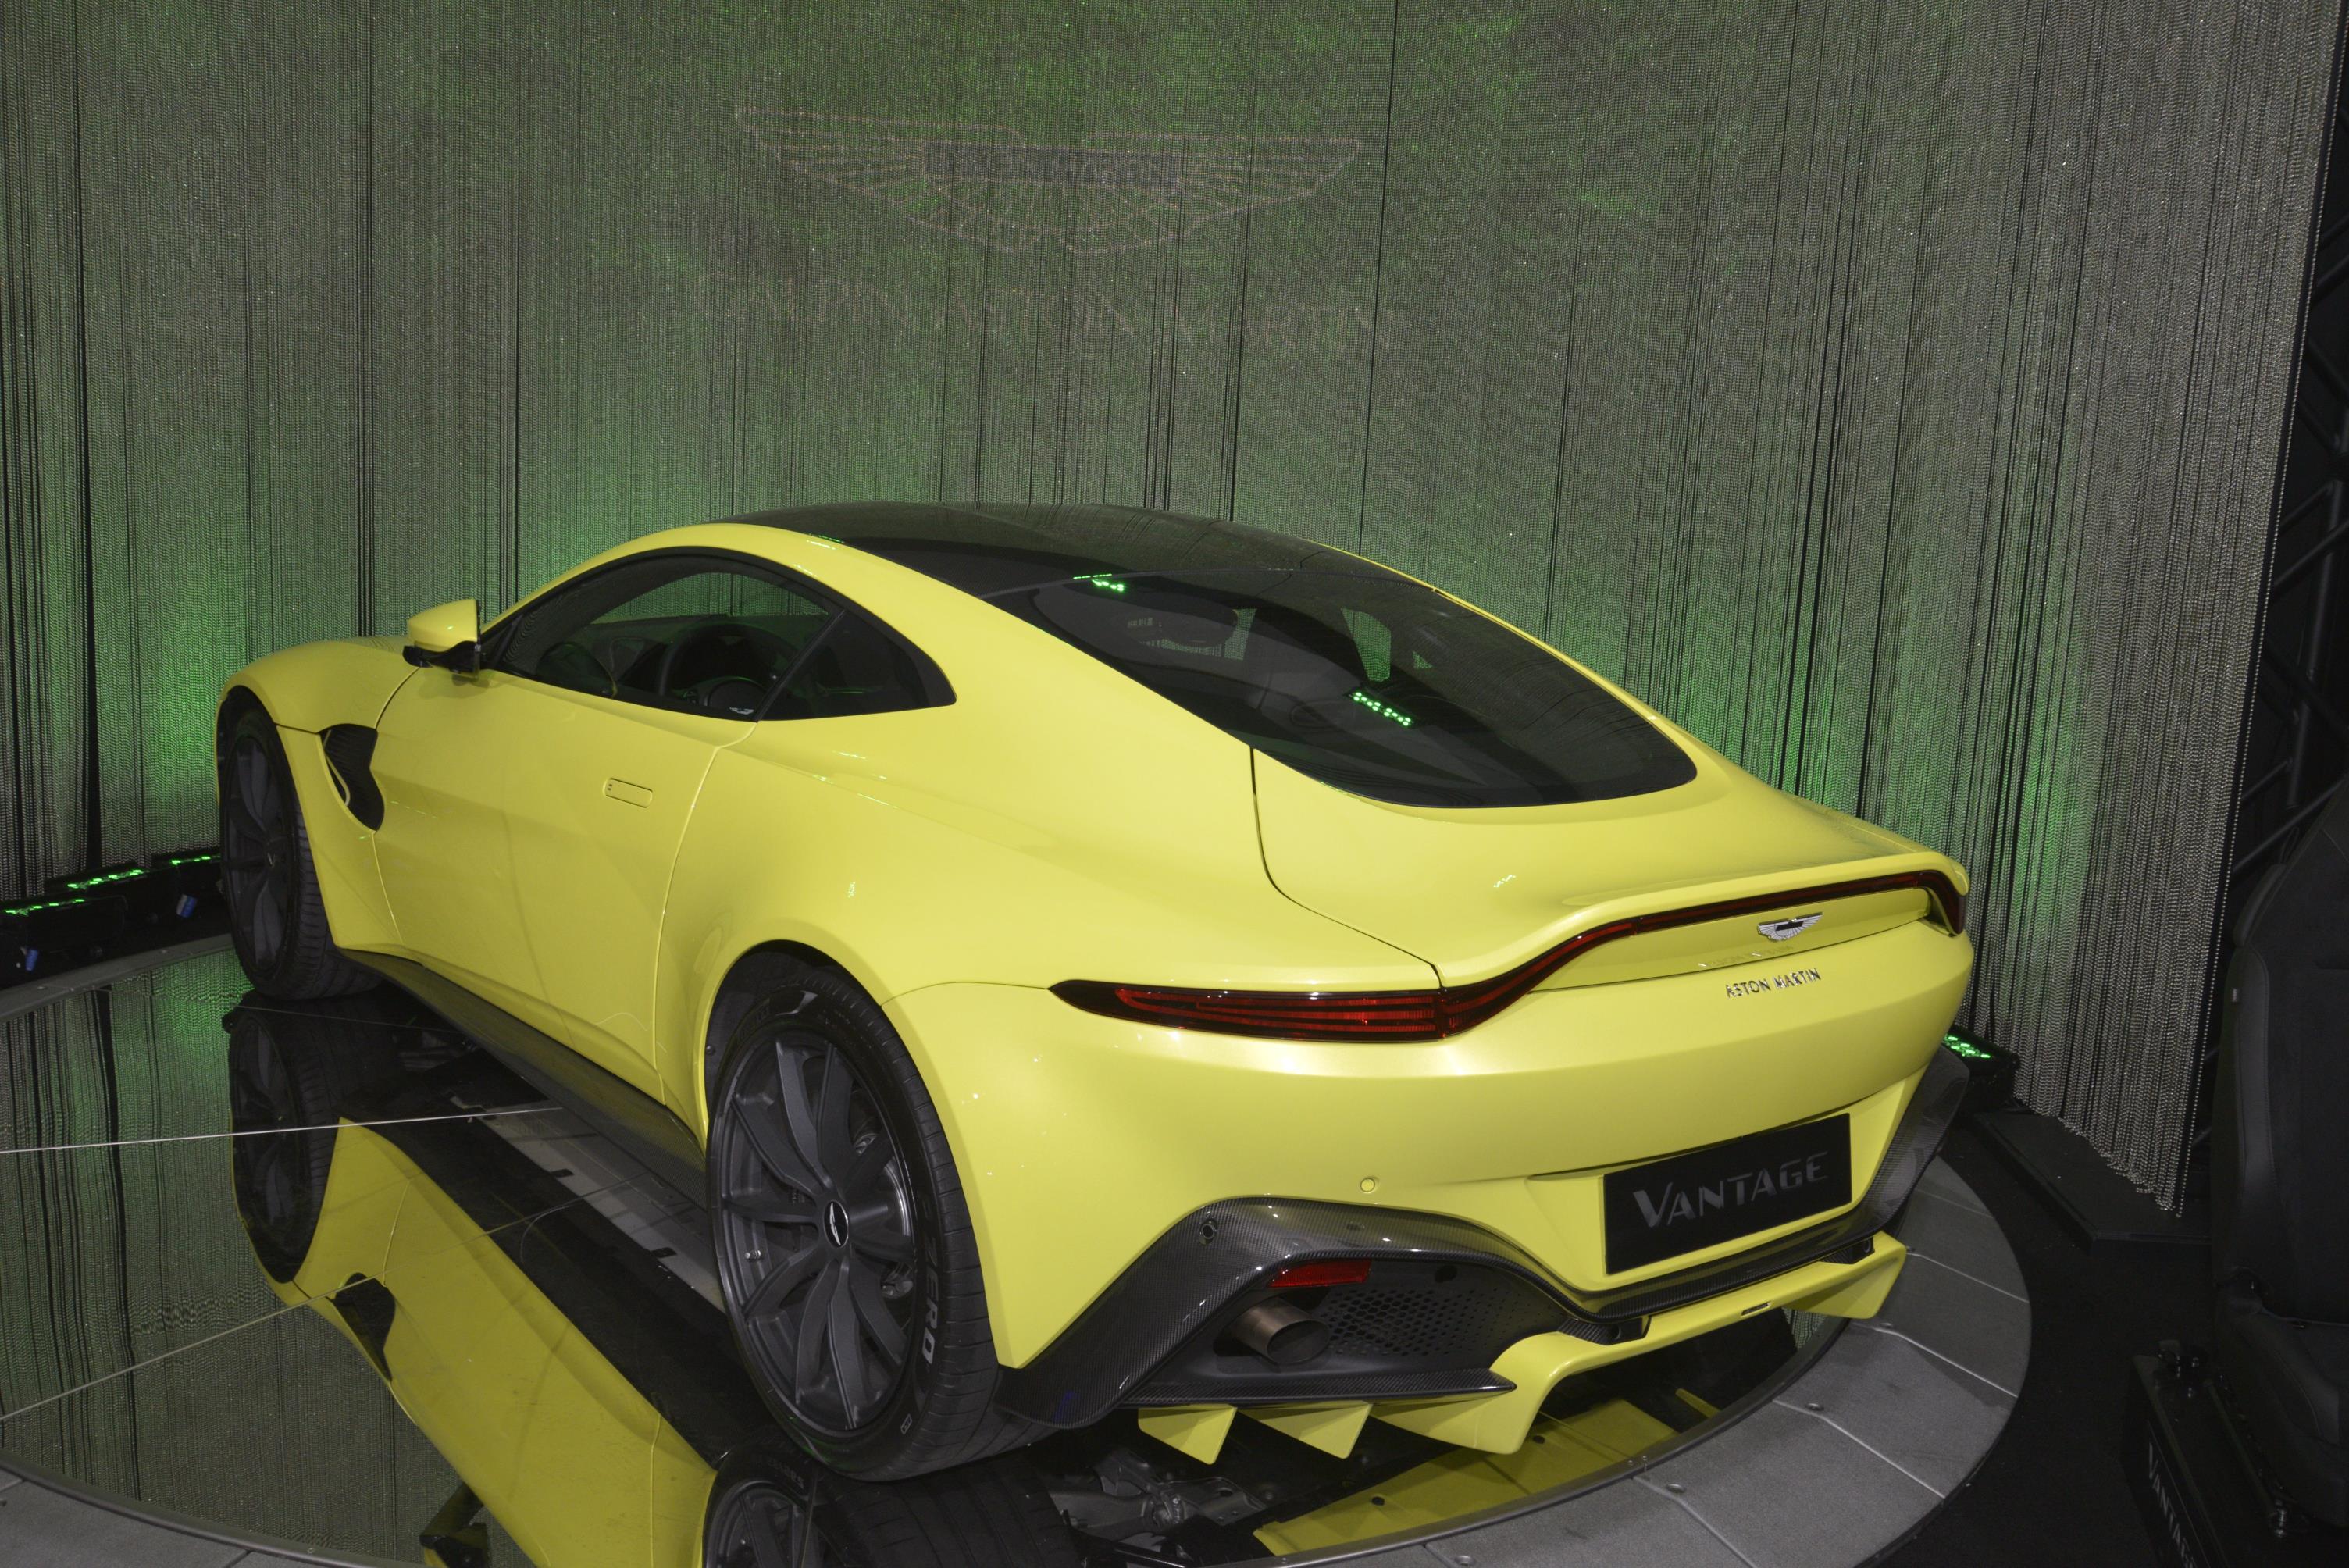 Aston Martin Vantage mod specifications